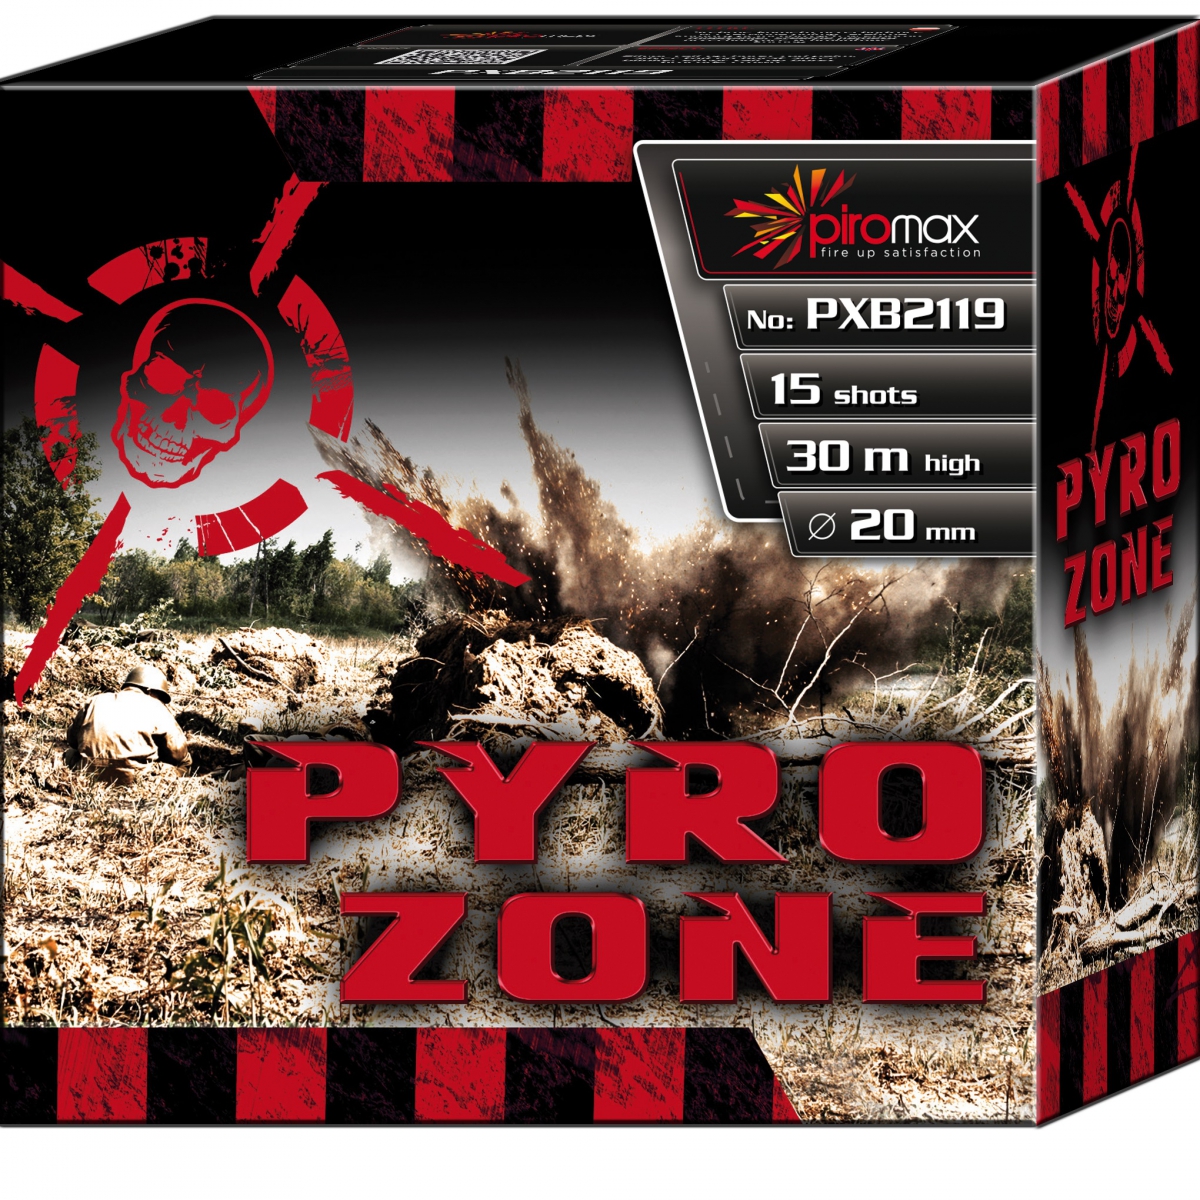 PXB2119 Pyro Zone